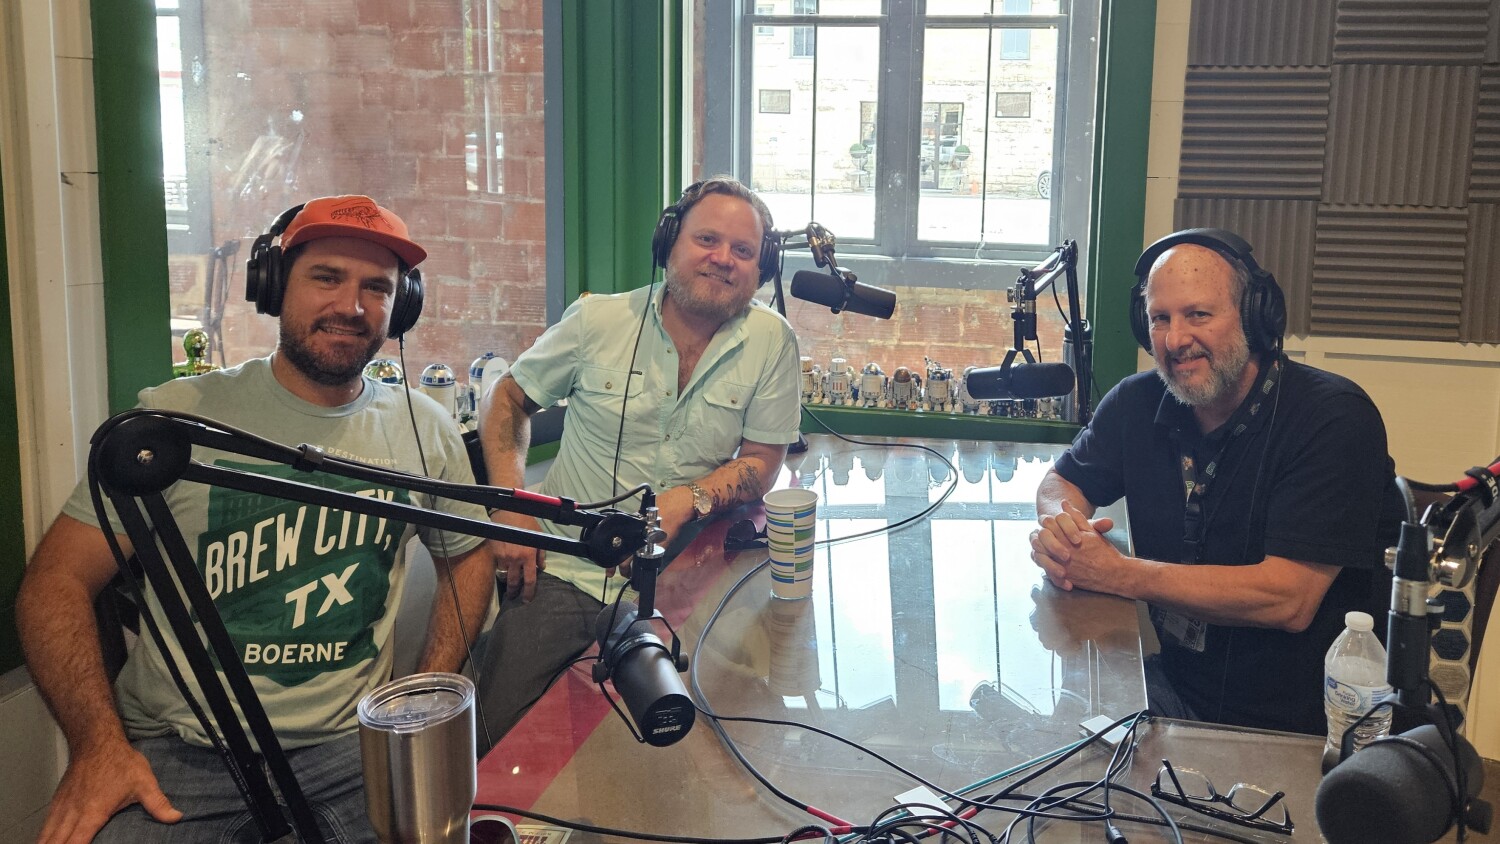 The Boerne Brew: Jeff Flinn talks "Brew City Texas" with Josh Mazour and Ty Wolosin